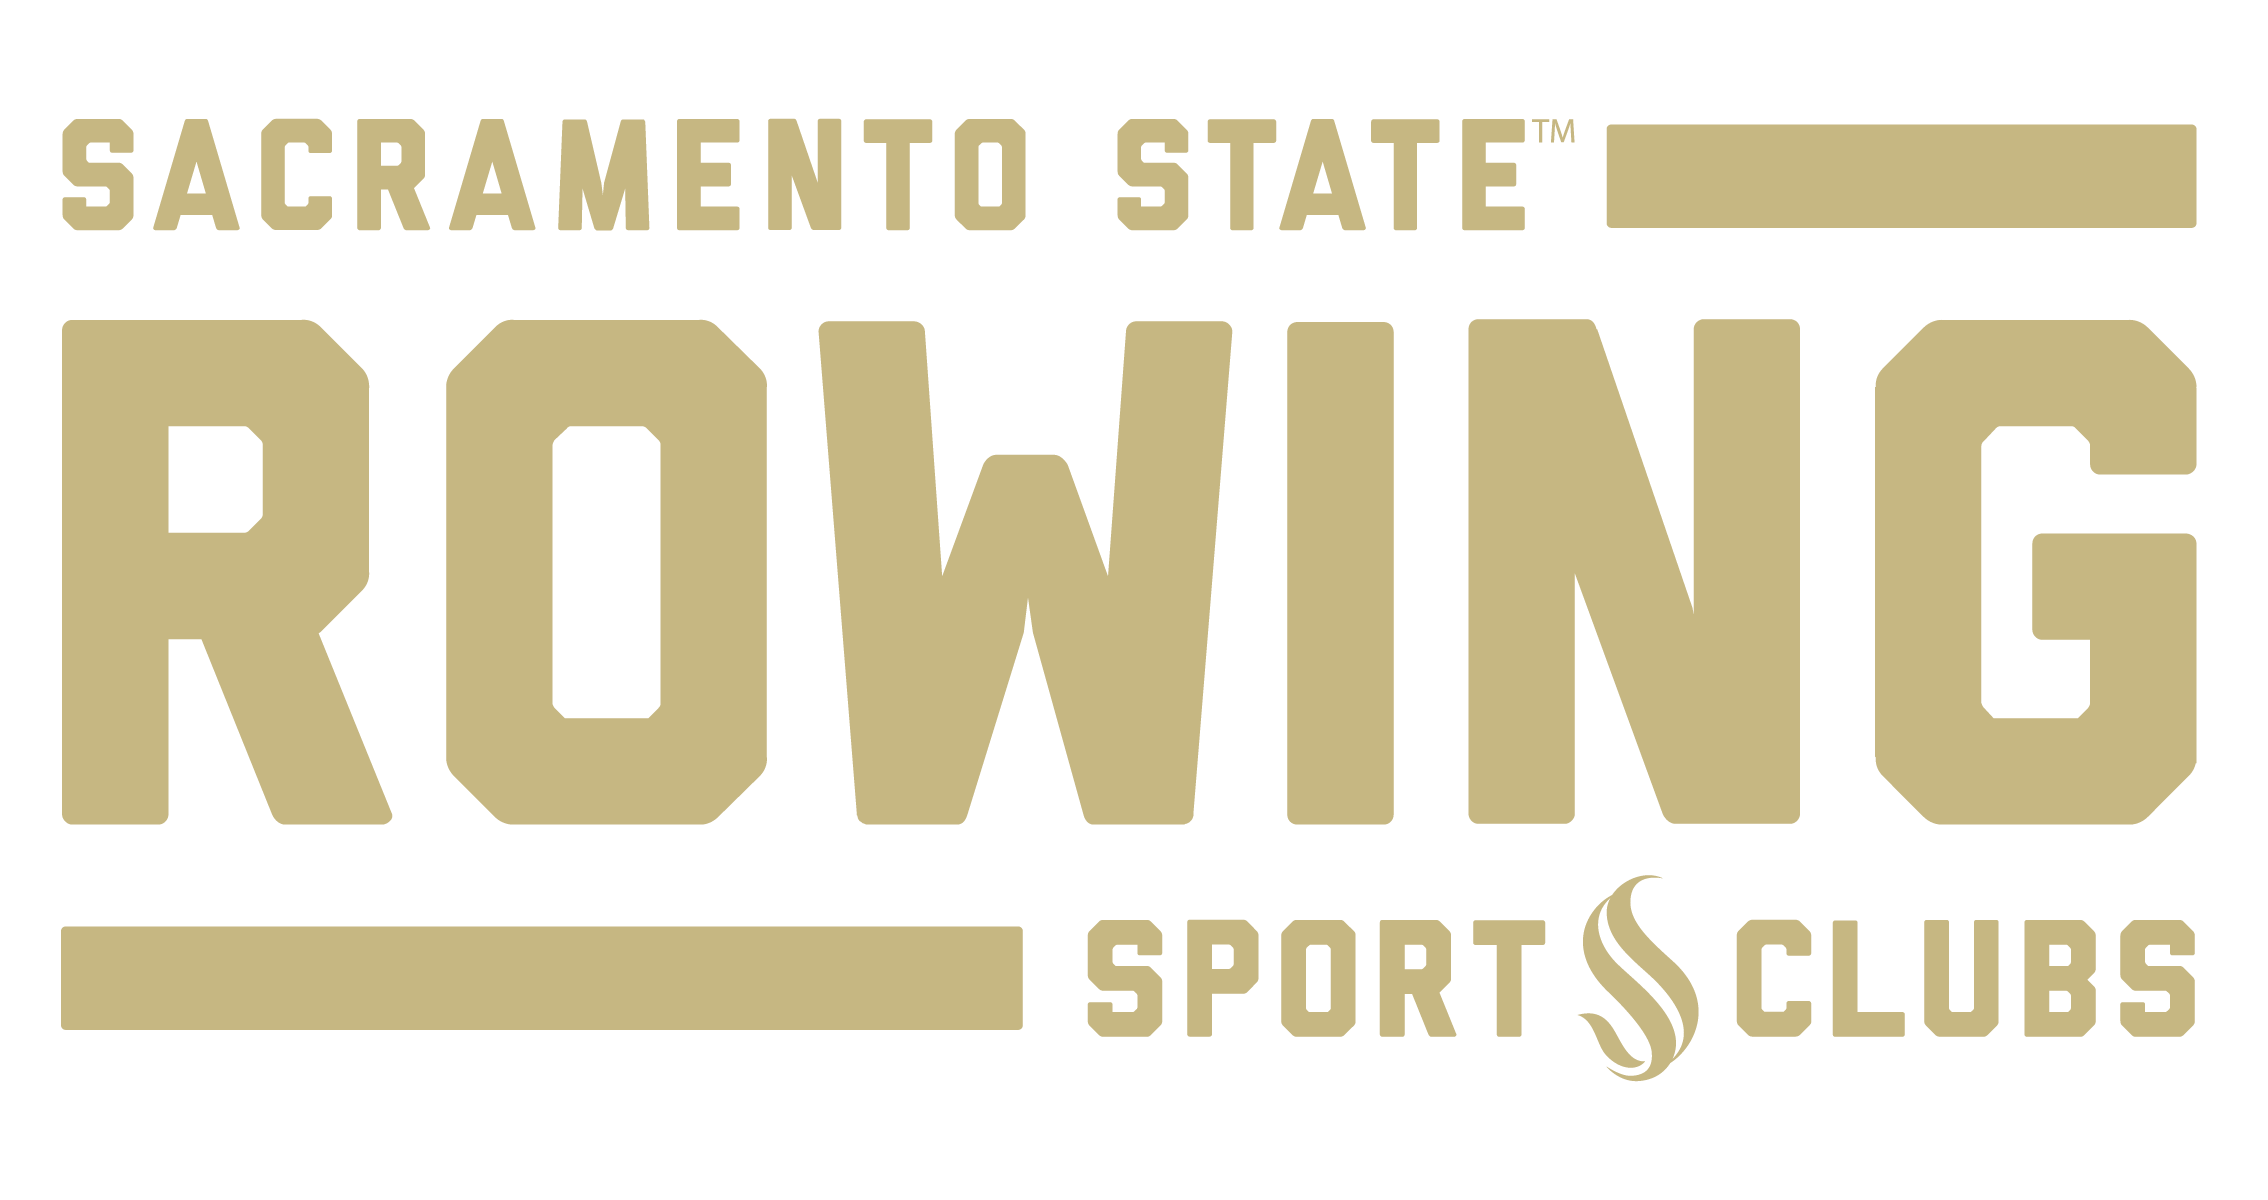 Sacramento State Rowing Club logo